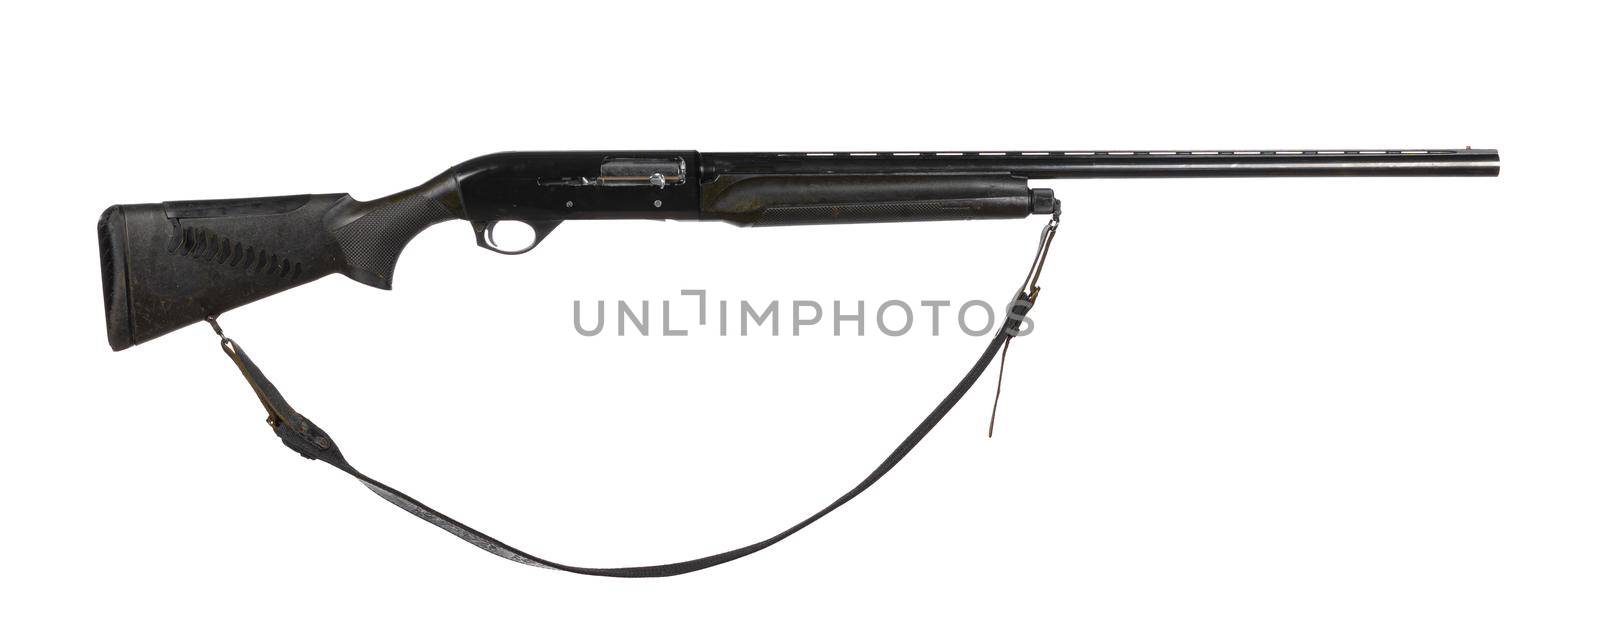 Modern hunting rifle isolated on white background by Fabrikasimf